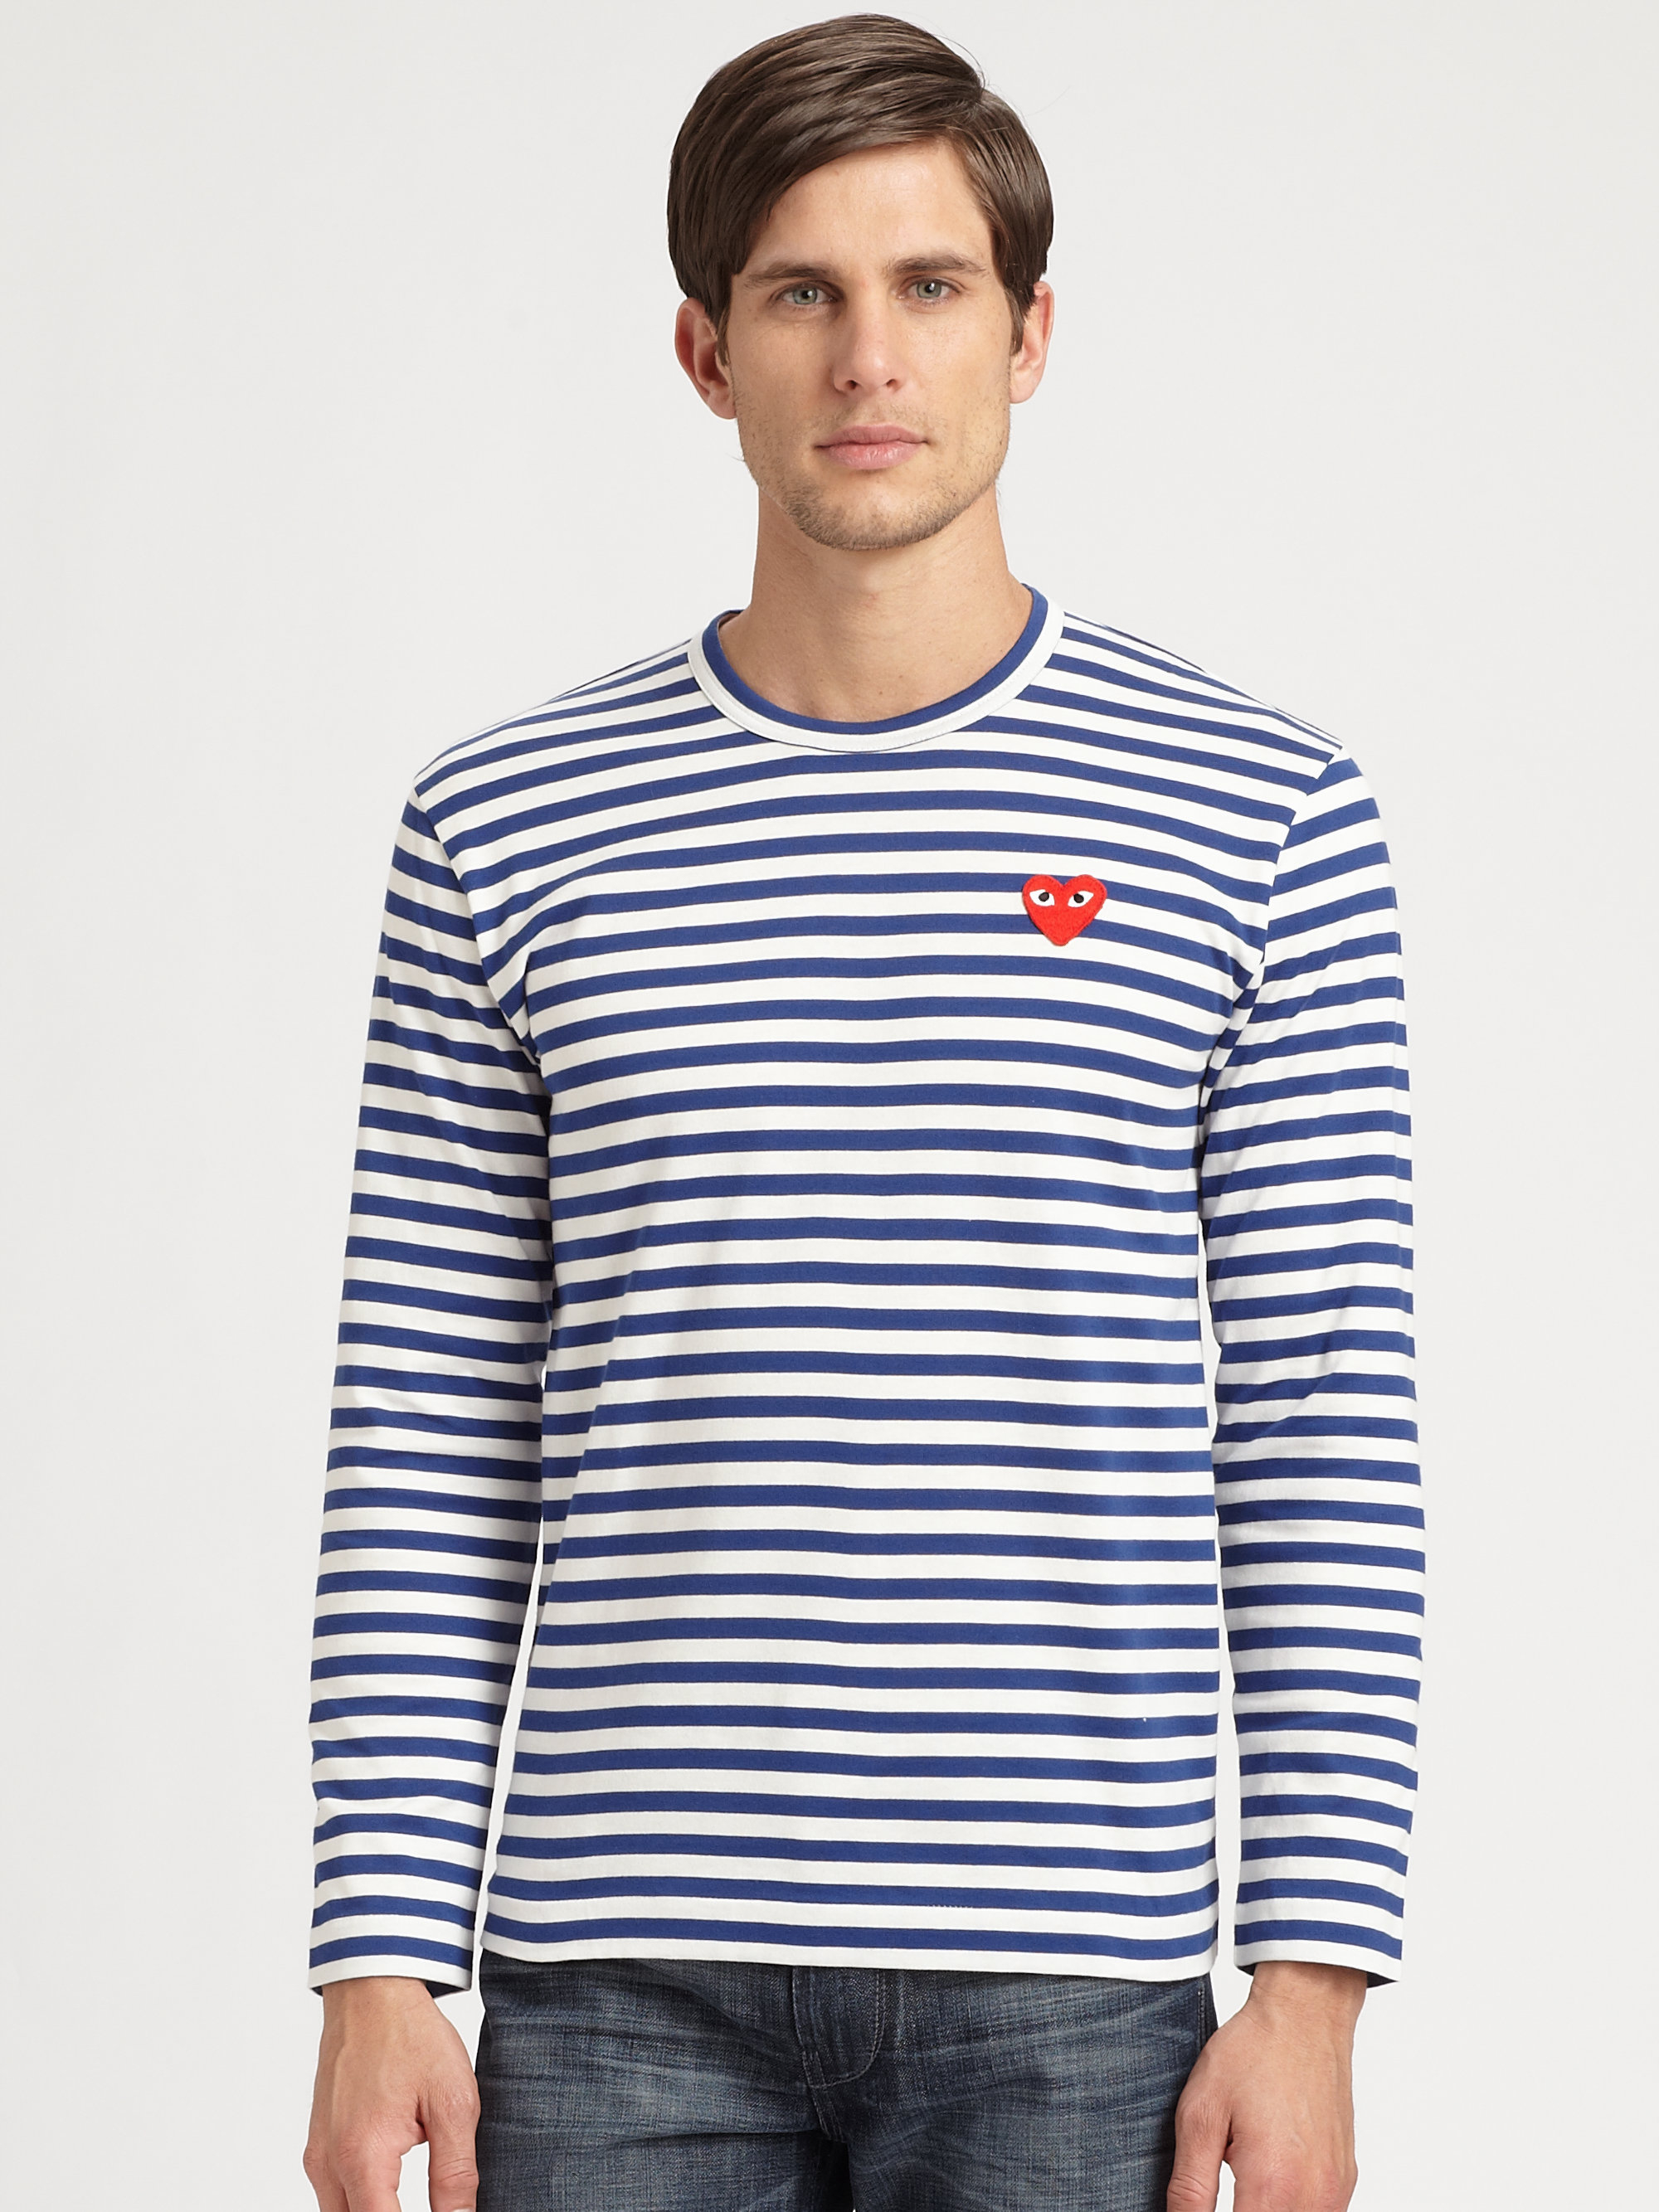 Lyst - Play comme des garçons Striped Cotton Shirt in Blue for Men